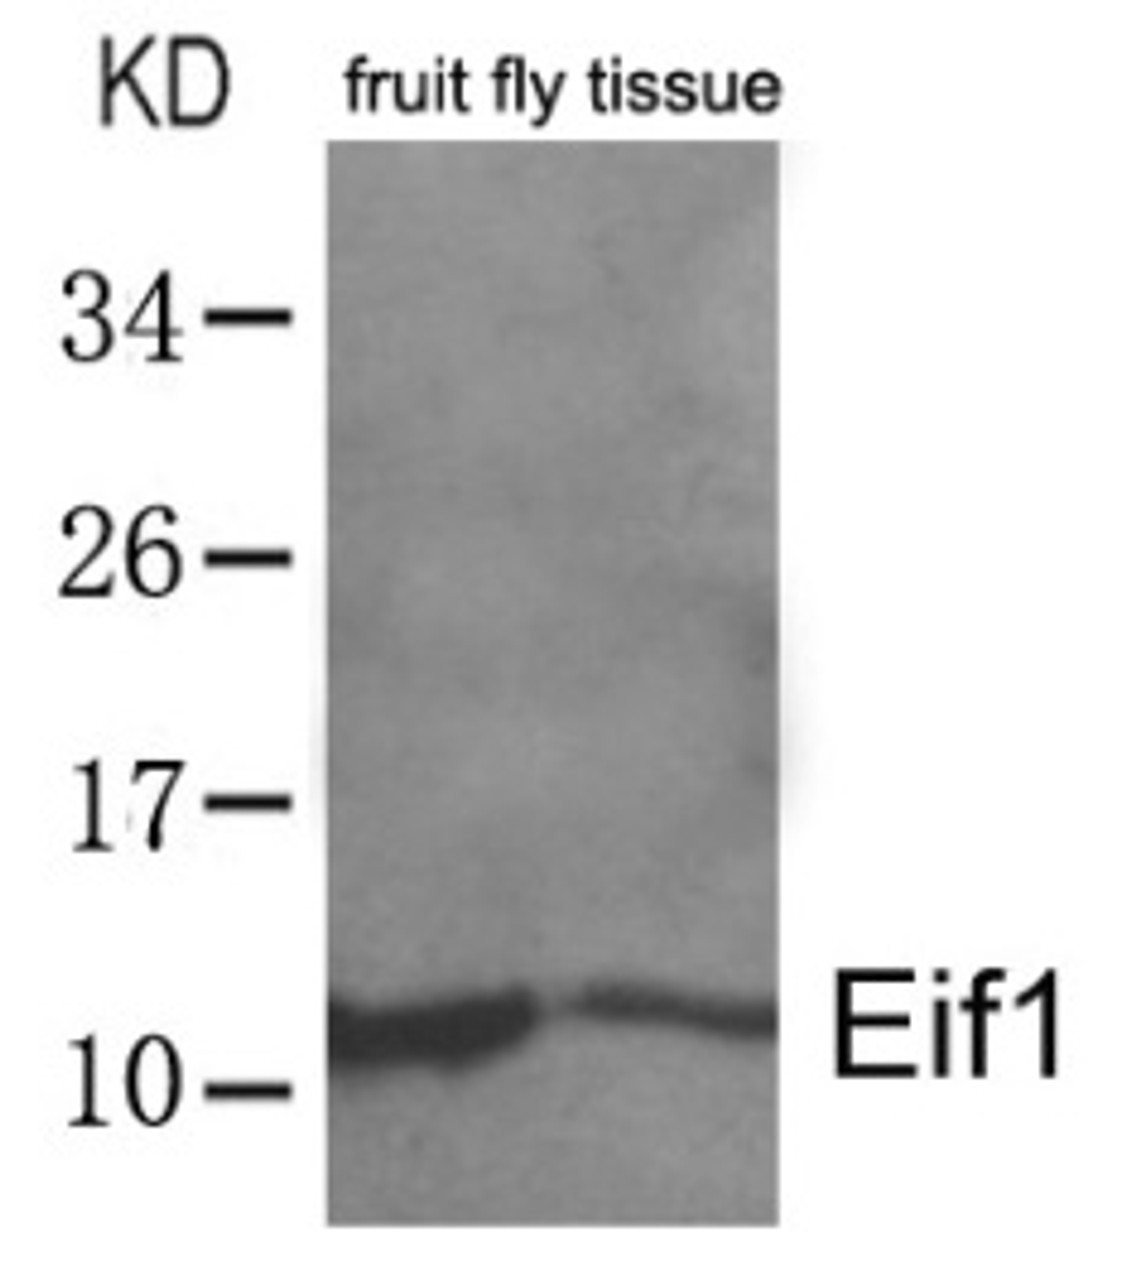 Western blot analysis of lysed extracts from whole fruit fly (drosophila melanogaster) tissue lysate using Eif1 Antibody.